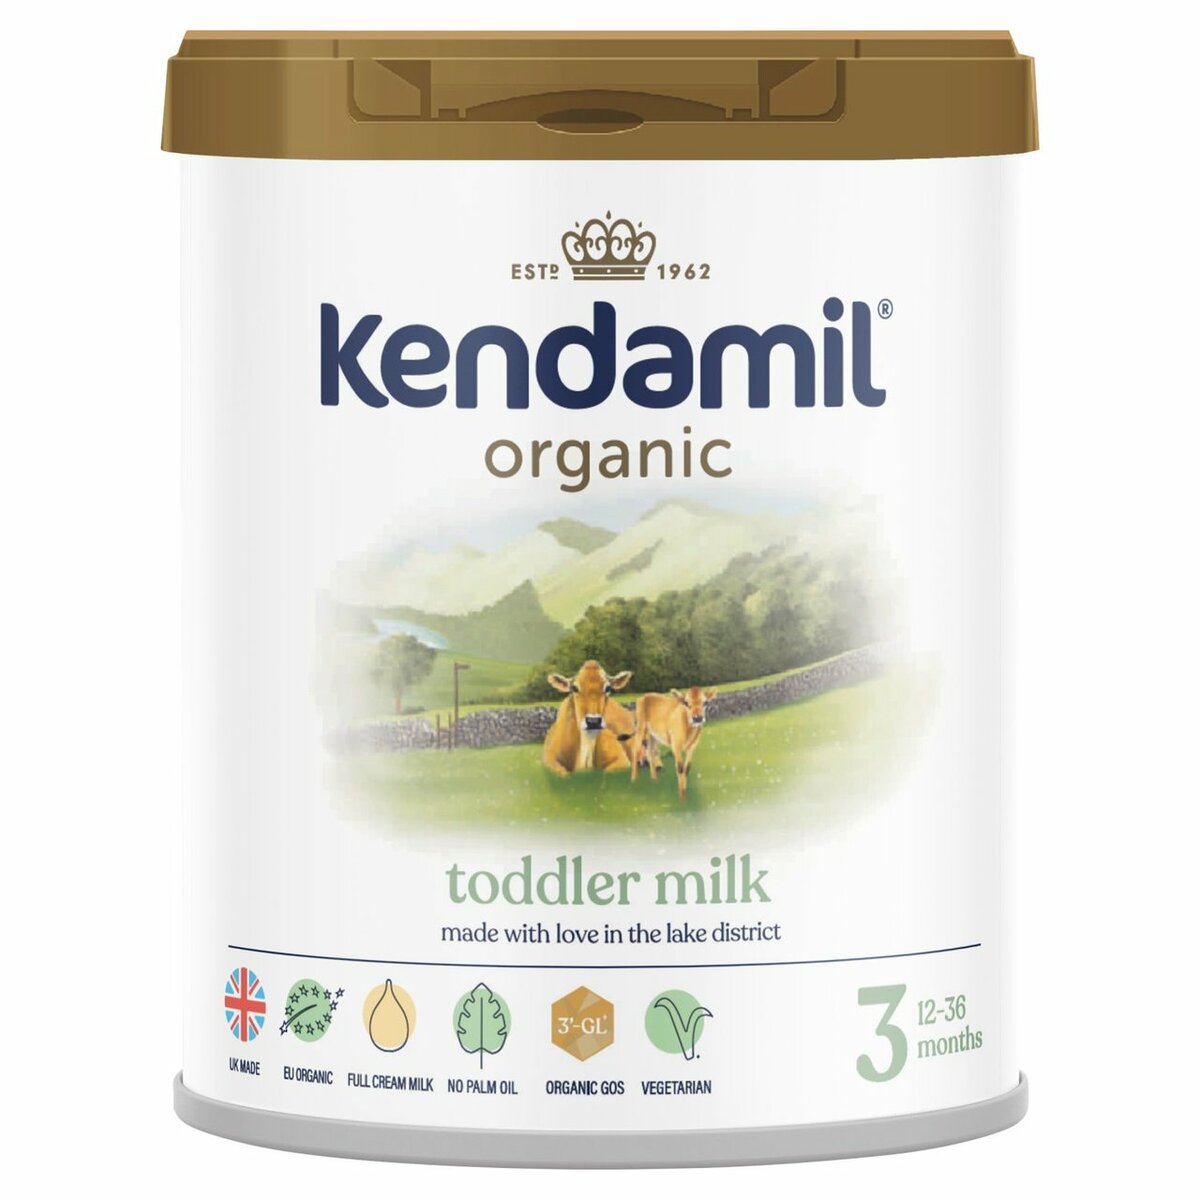 Kendamil Organic ケンダミル オーガニック 乳児用粉ミルク 800g おトク 6個セット 英国発送 Milk 1歳から 12ヶ月から パーム油フリー 年間ランキング6年連続受賞 Toddler 3